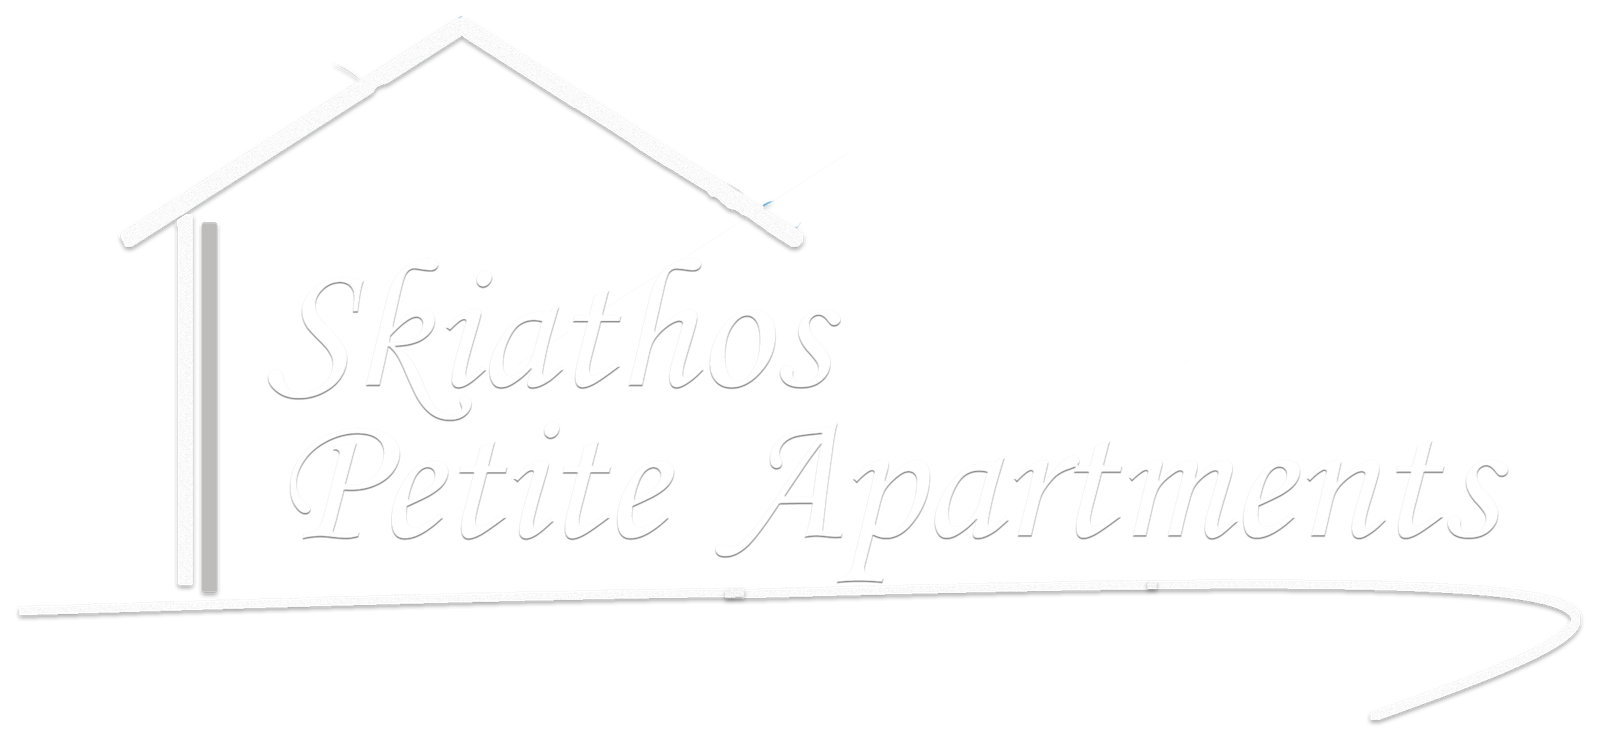 Skiathos Petite Apartments | Car Rental Terms & Conditions - Skiathos Petite Apartments